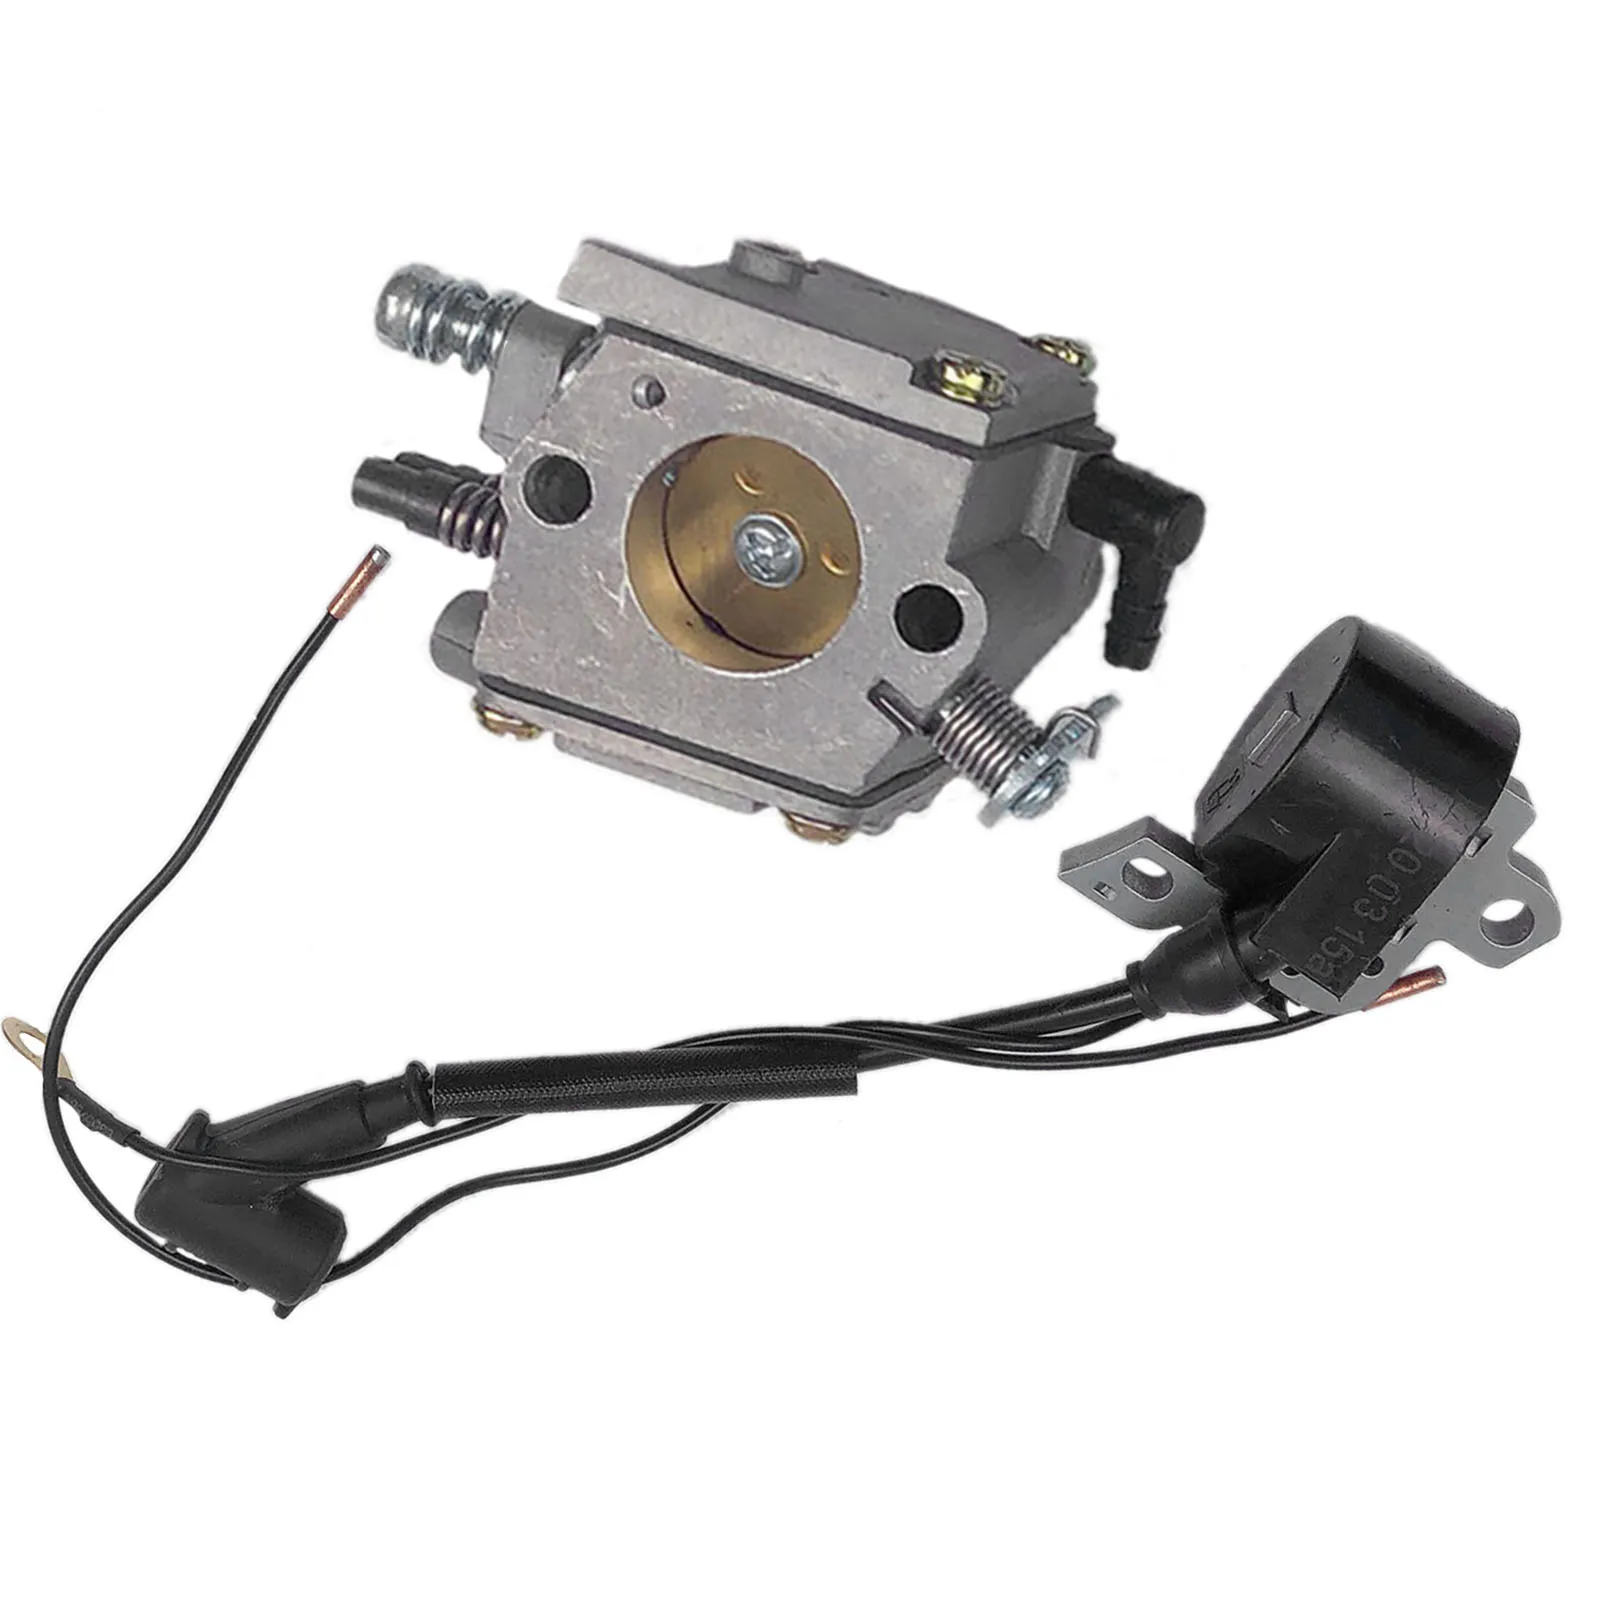 Hot Carburetor Ignition Coil & Fuel Line /Filter Spark Plug fit For STIHL Chain Saw 038 MS380 MS381 038 AV SUPER MAGNUM tools